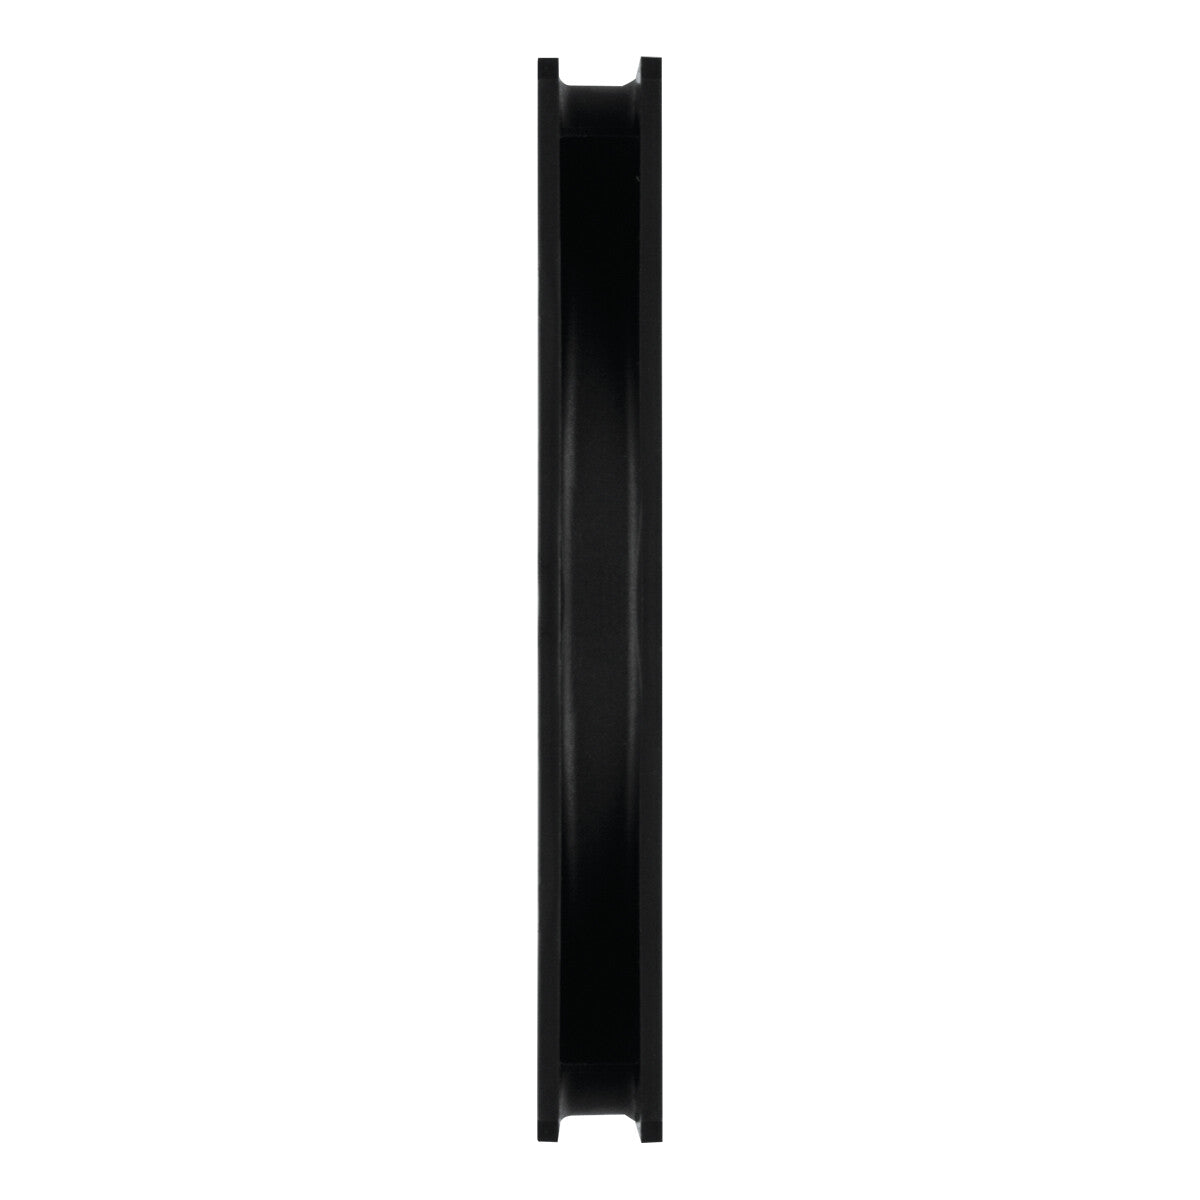 ARCTIC P14 Slim - PWM PST PC Case Fan in Black  - 140mm